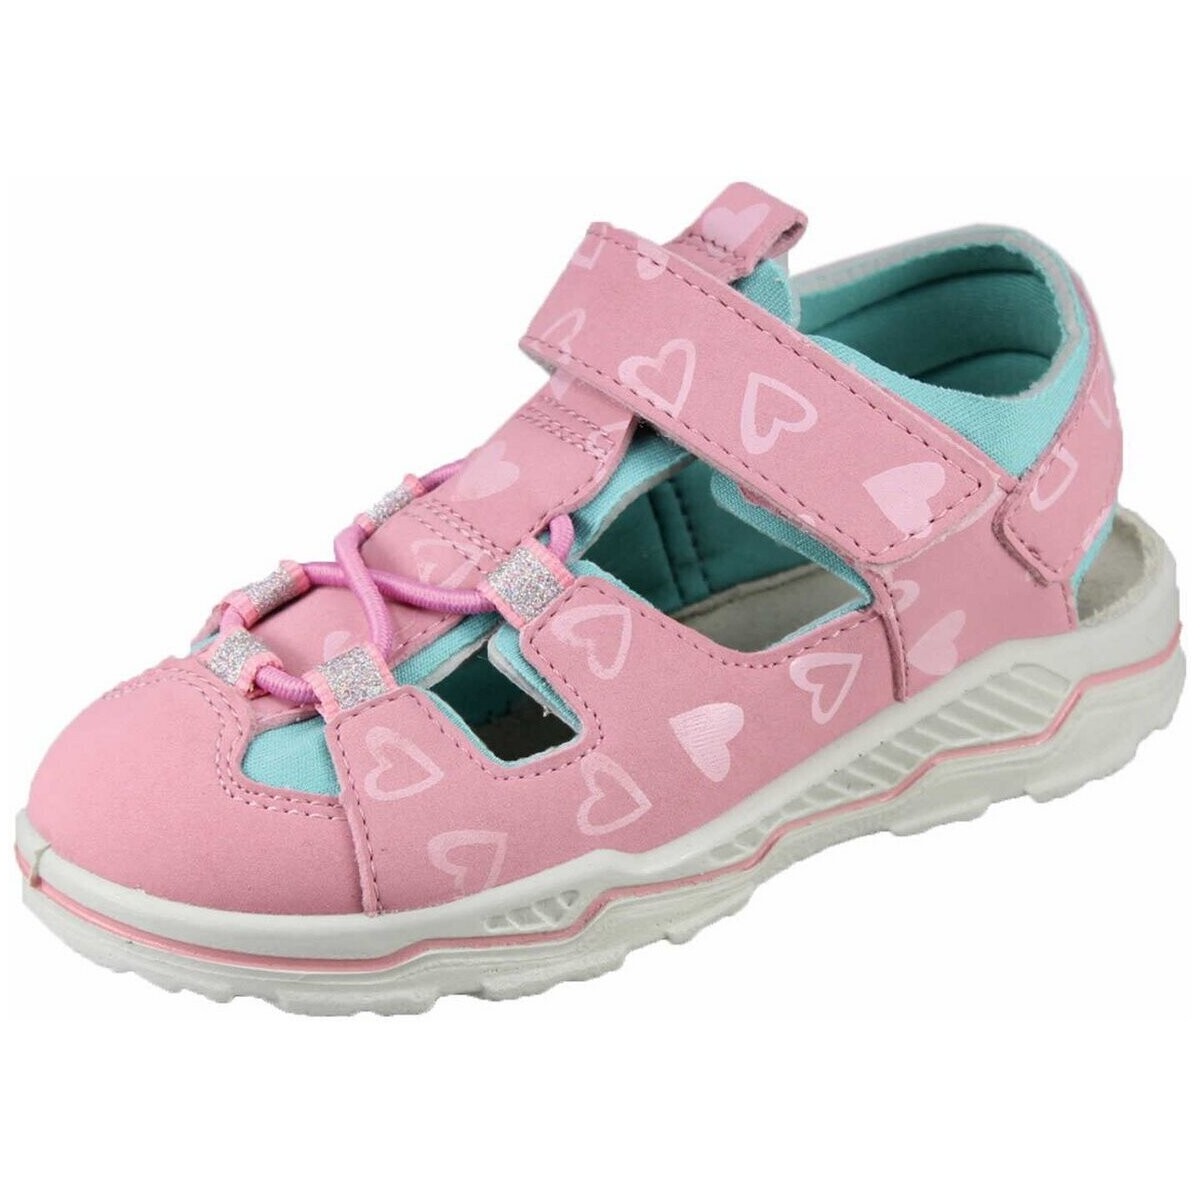 Schuhe Mädchen Babyschuhe Ricosta Maedchen GERY 50 2900302/321 Other